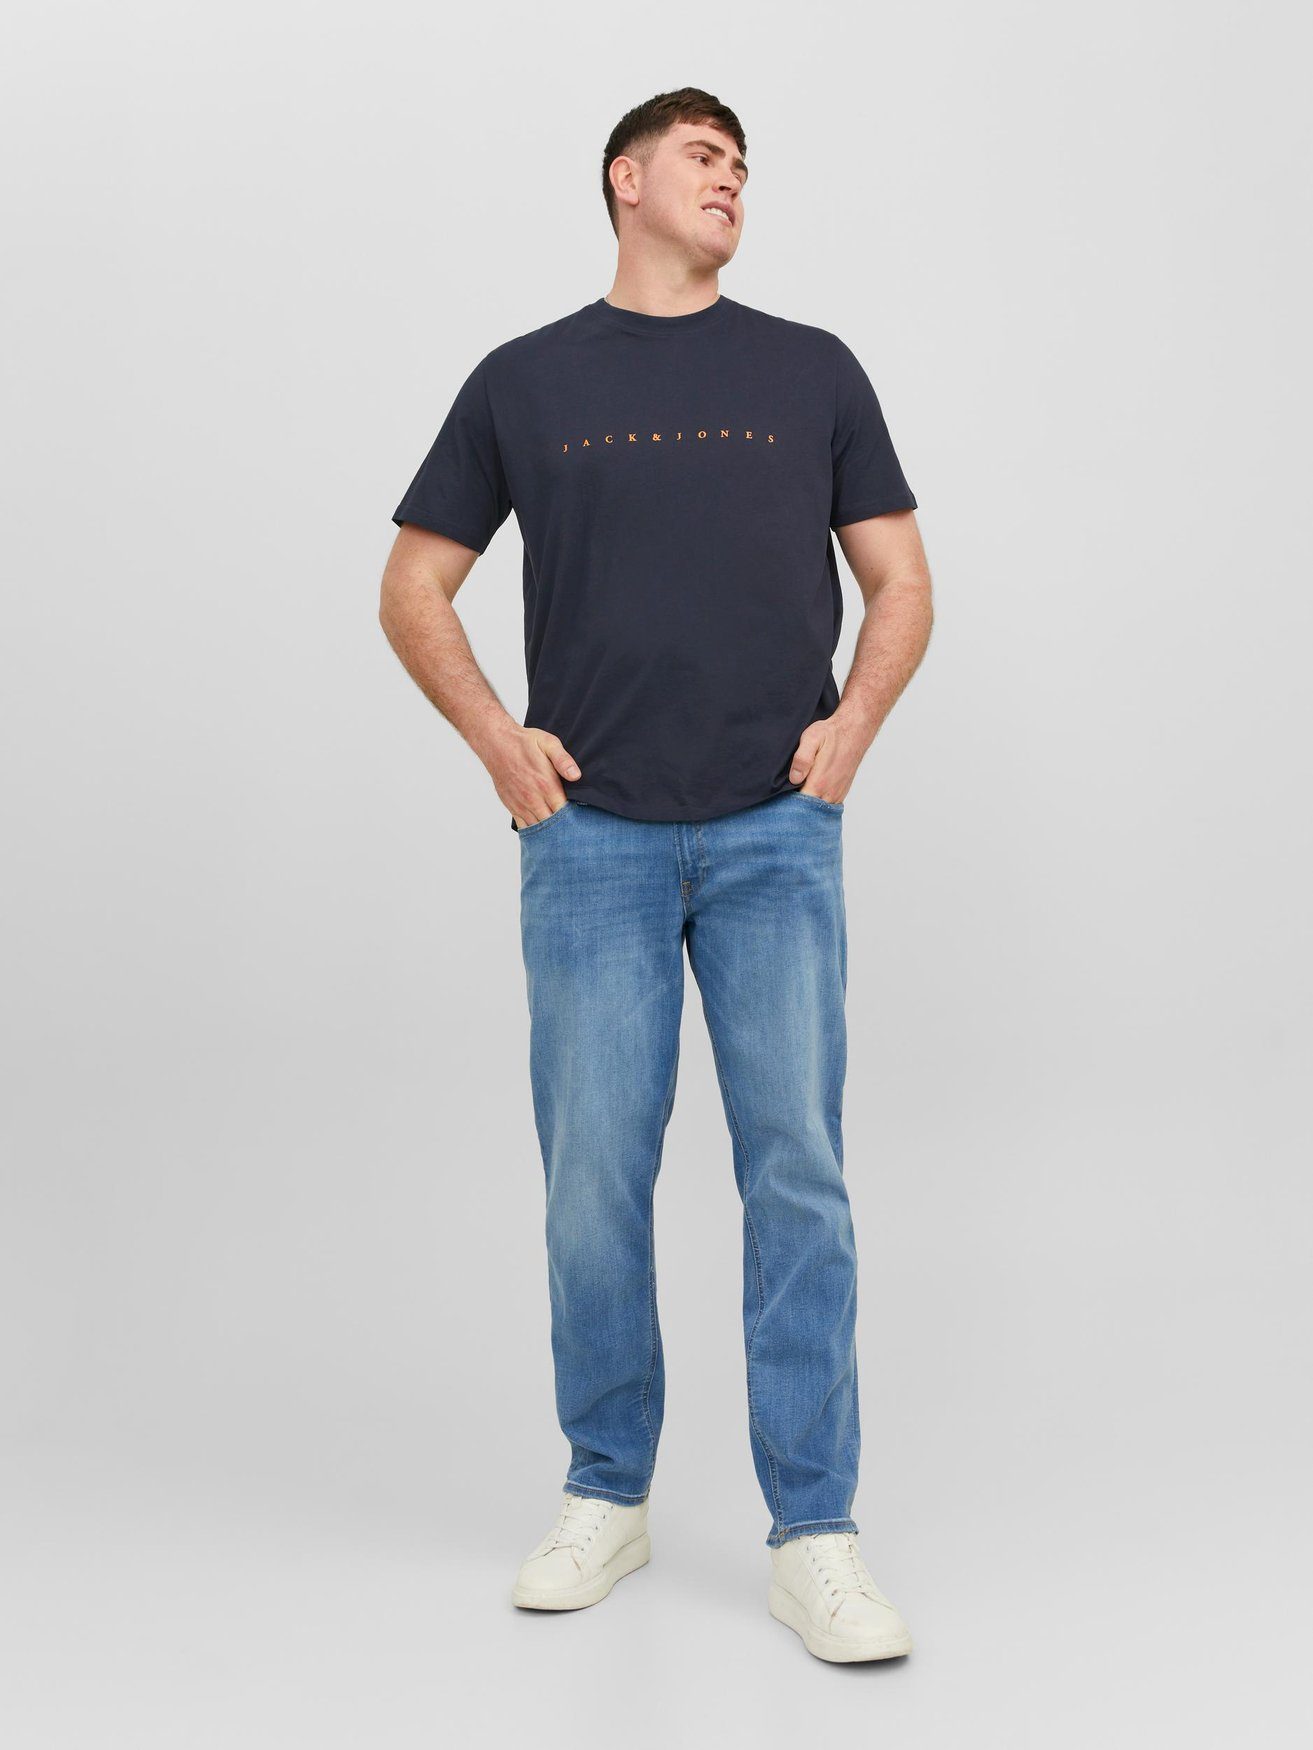 Jack & Jones T-Shirt JJESTAR Size Logo 6550 Plus Kurzarm Übergröße Shirt in Dunkelblau T-Shirt